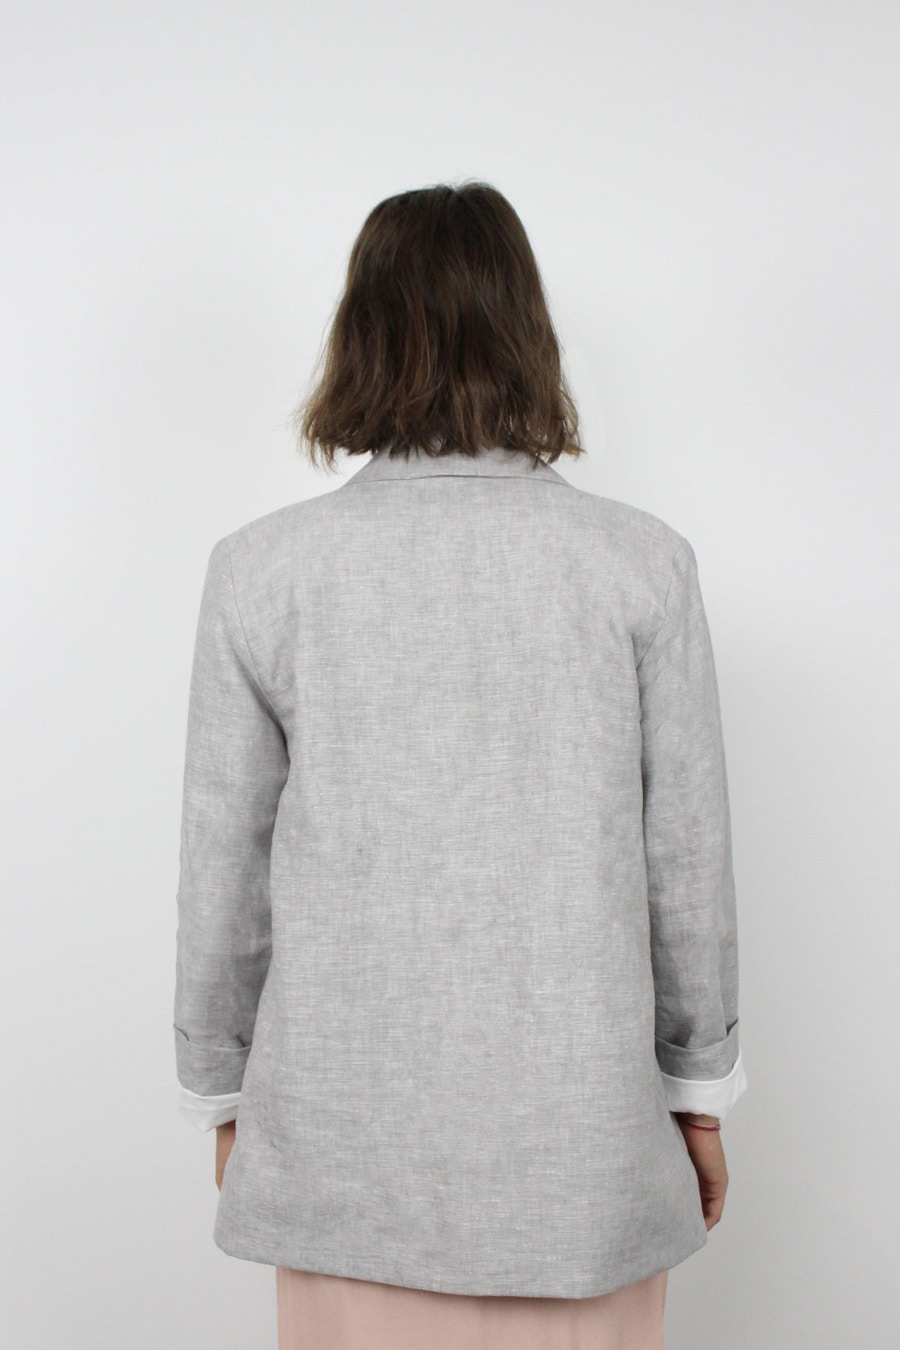 Barbara jacket republique du chiffon pattern back chambray linen fabric by the fabric store